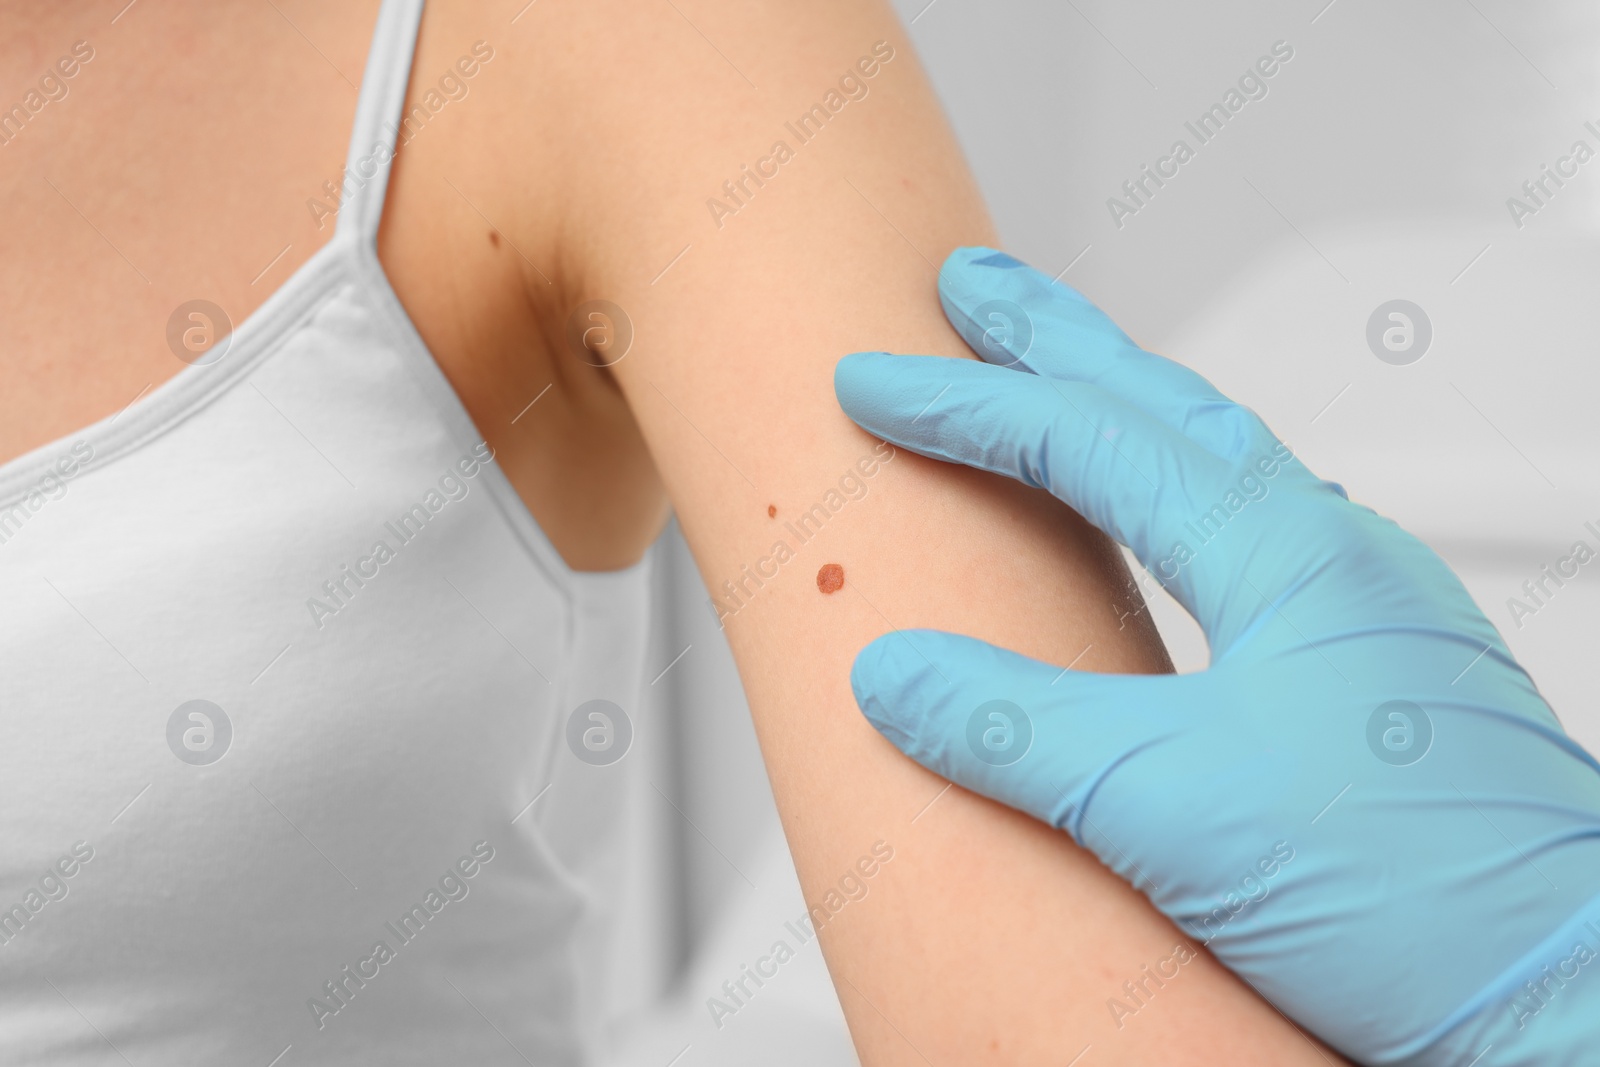 Photo of Dermatologist in rubber glove examining patient's birthmark on blurred background, closeup